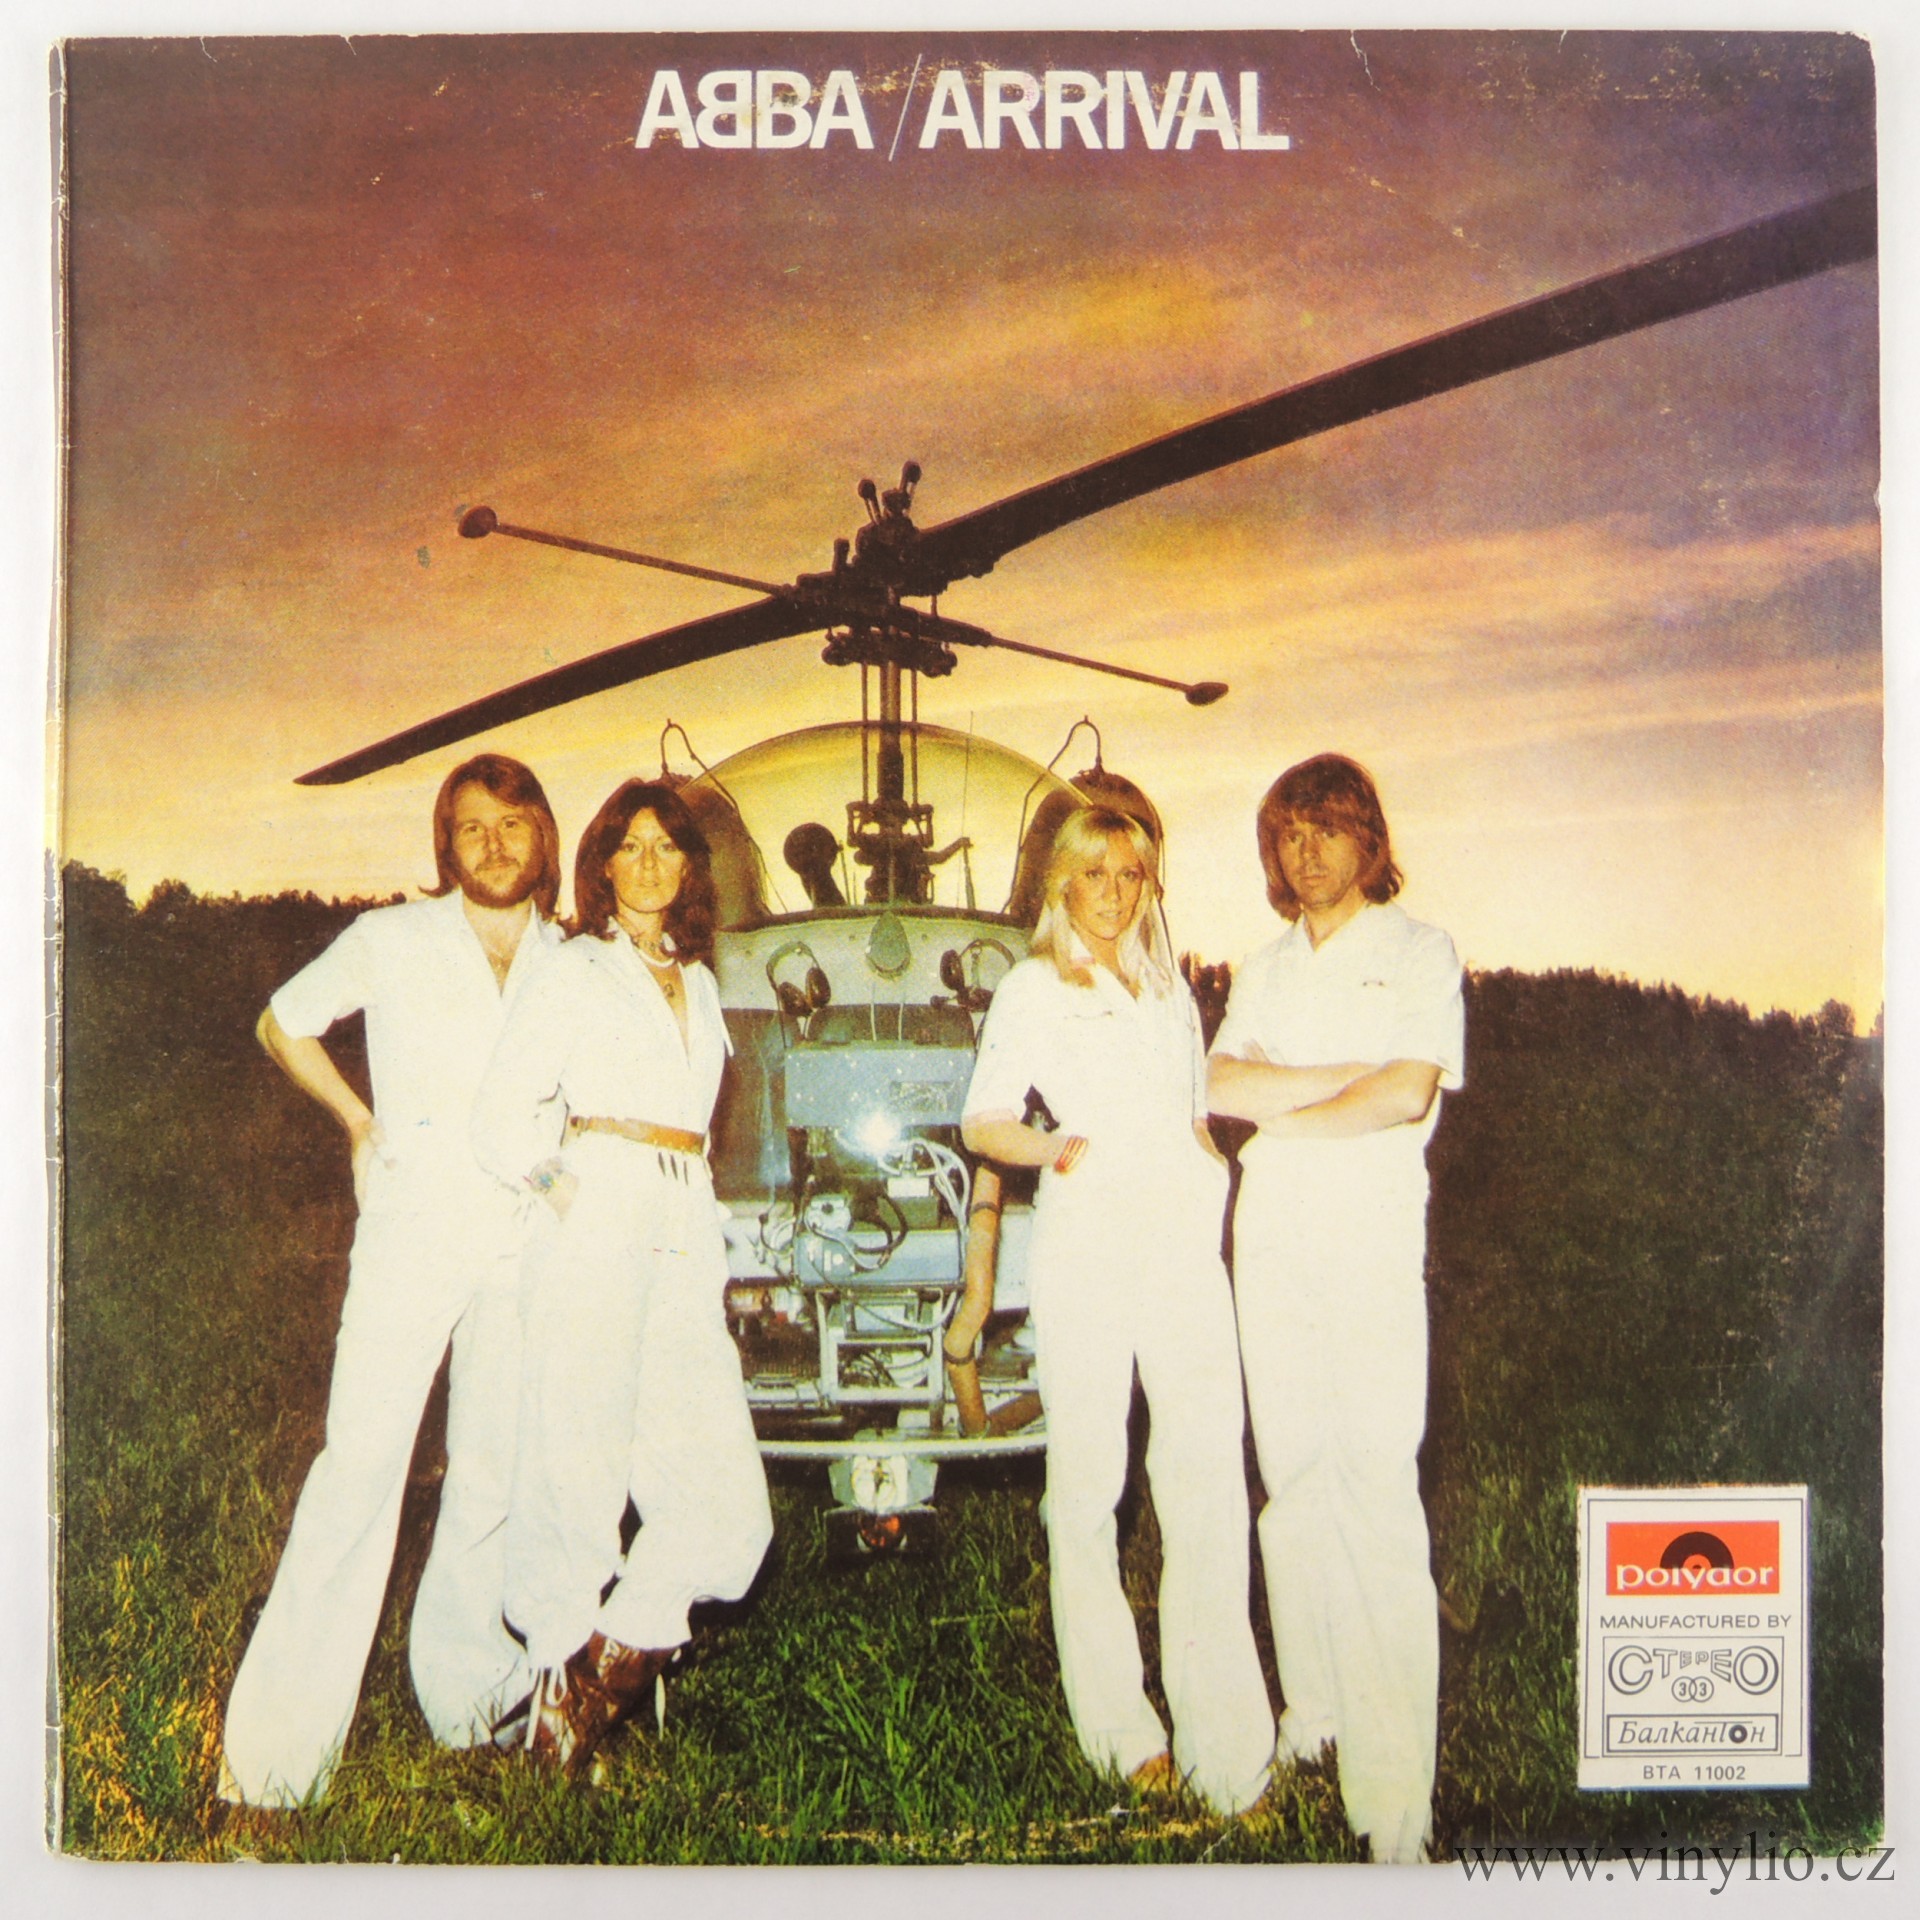 ABBA. Arrival